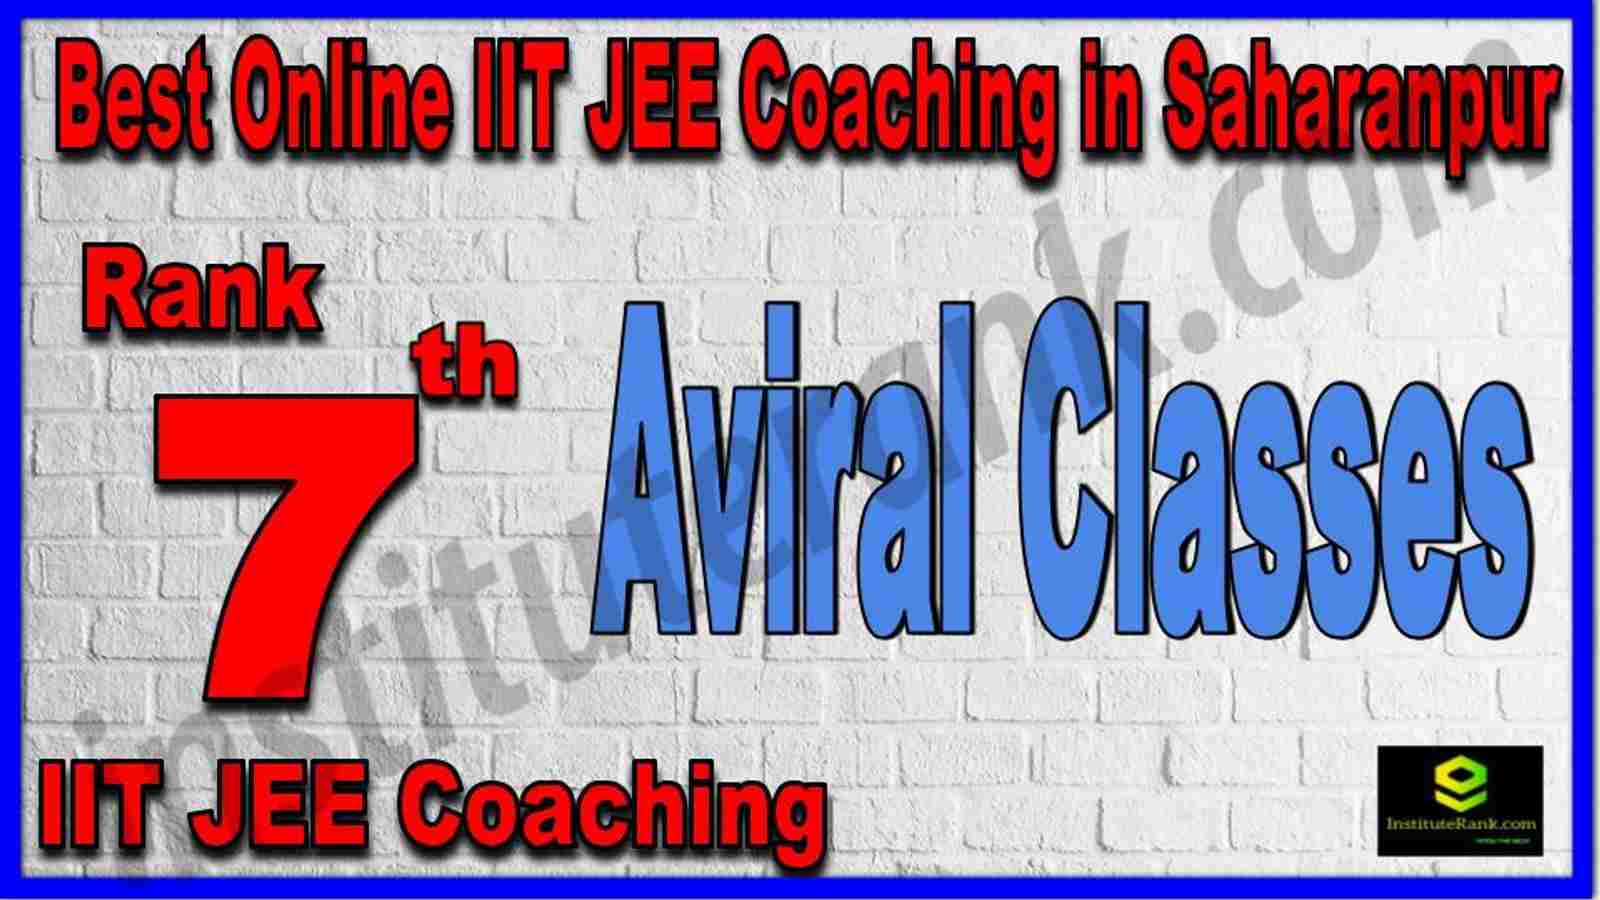 Rank 7th Best Online IIT JEE Coaching in Saharanpur